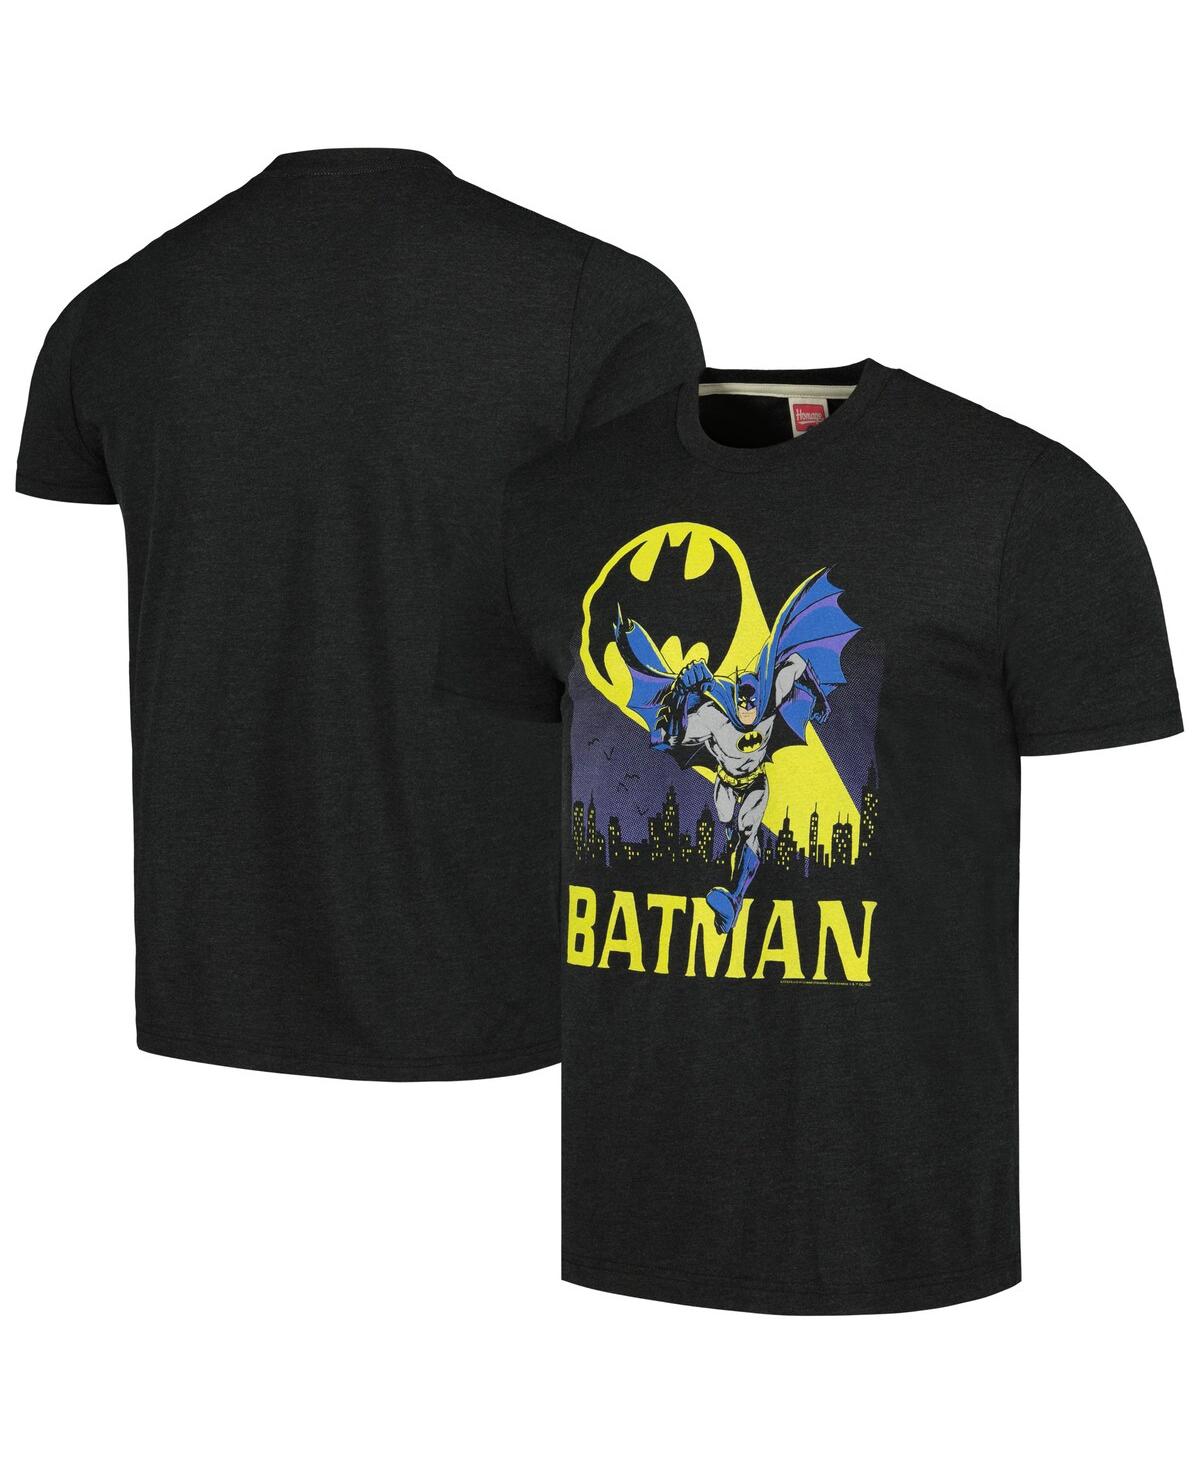 Men's and Women's Homage Charcoal Batman Graphic Tri-Blend T-shirt - Charcoal